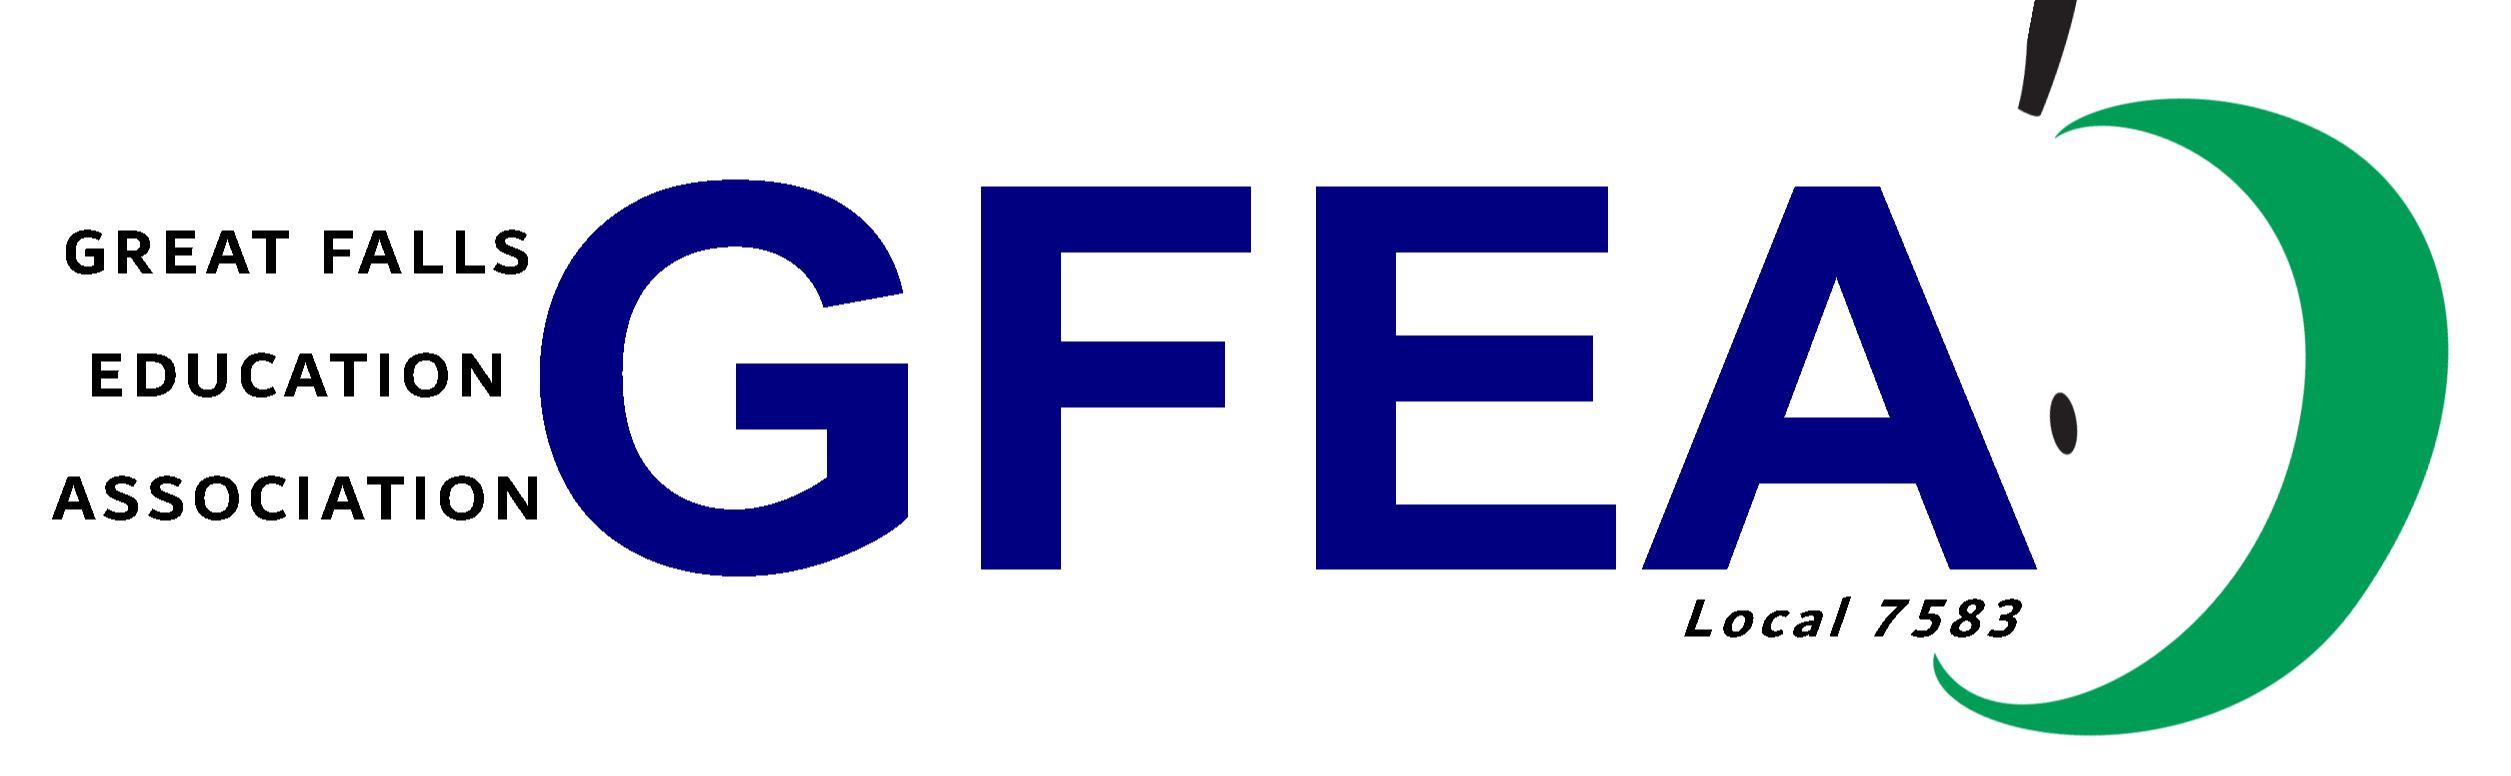 Great Falls Education Association Logo